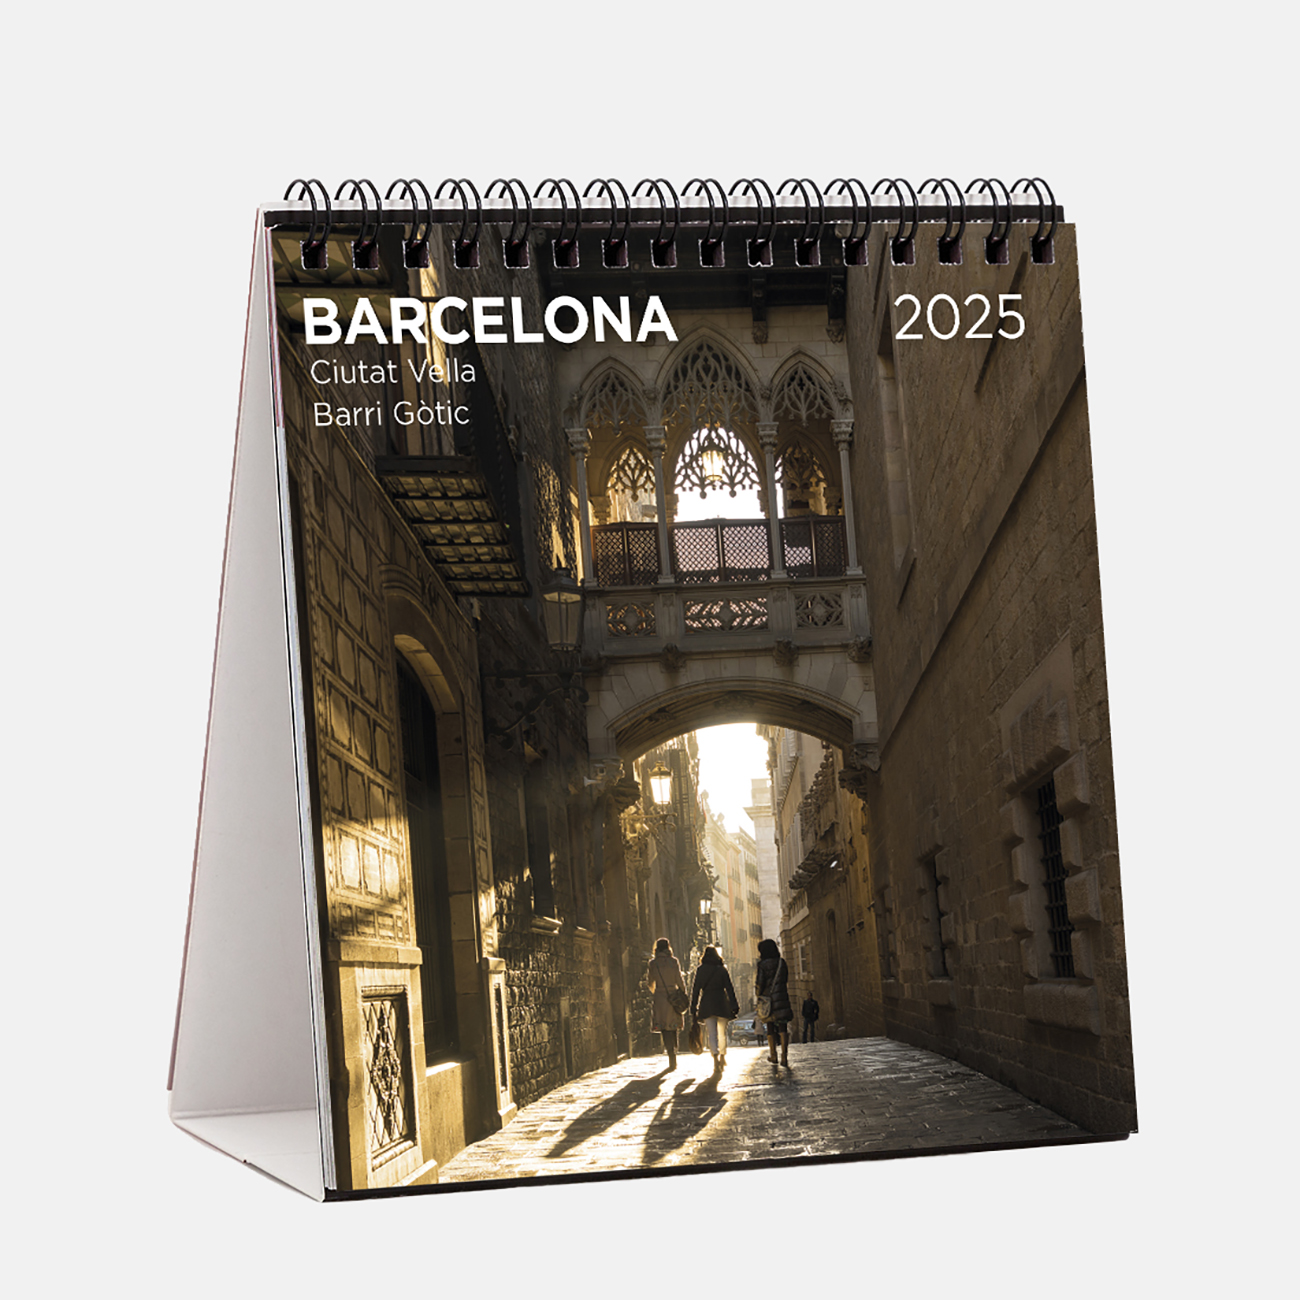 Calendario 2025 Barcelona (Ciutat Vella) s25b2 calendario sobremesa 2025 barcelona